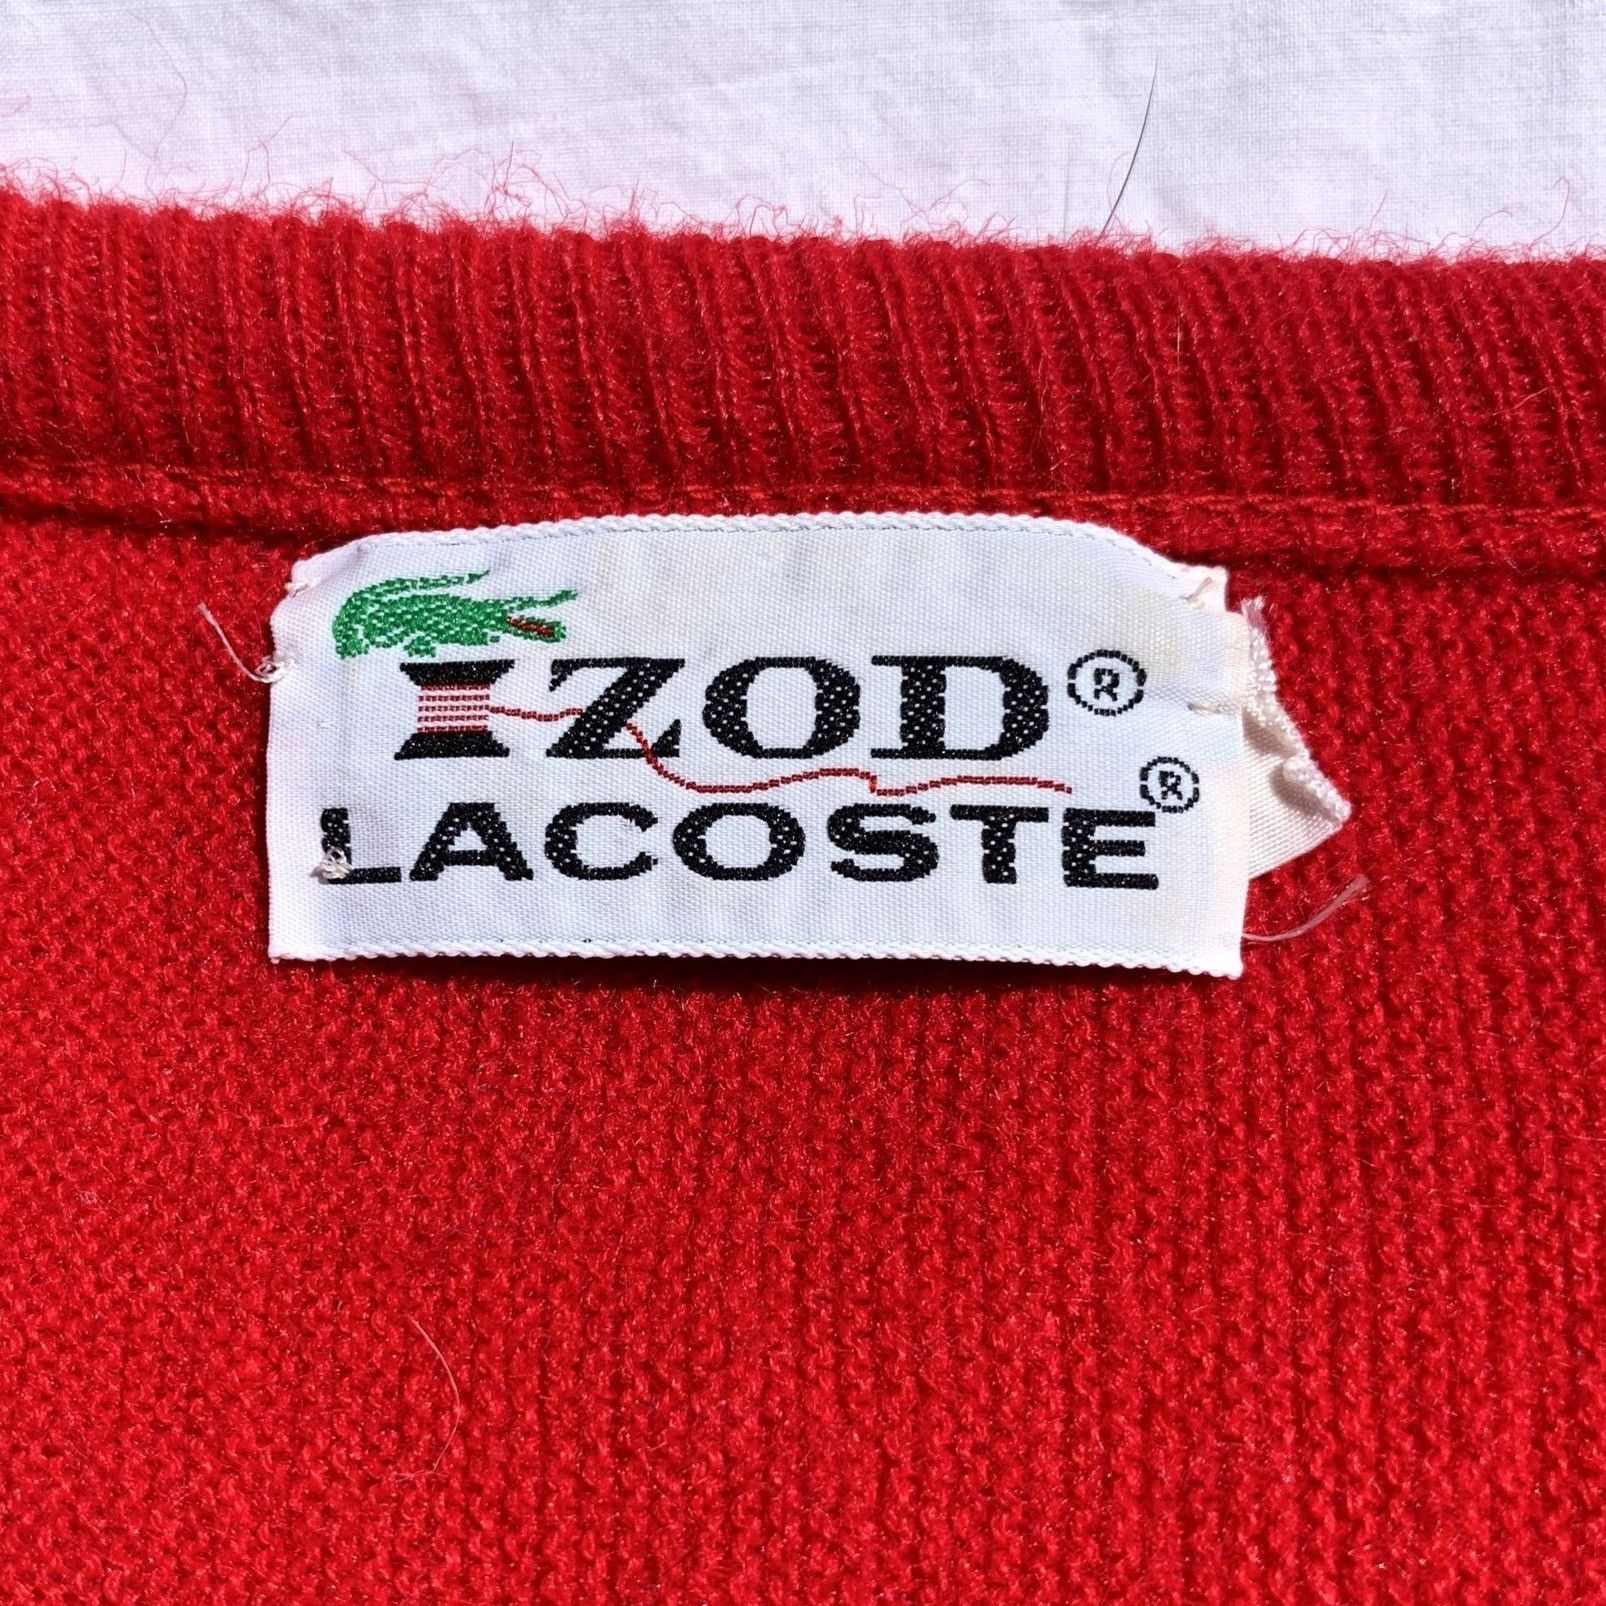 Vintage Lacoste Vintage 1970s Men's Red Pullover Sweater Large Size US L / EU 52-54 / 3 - 4 Thumbnail